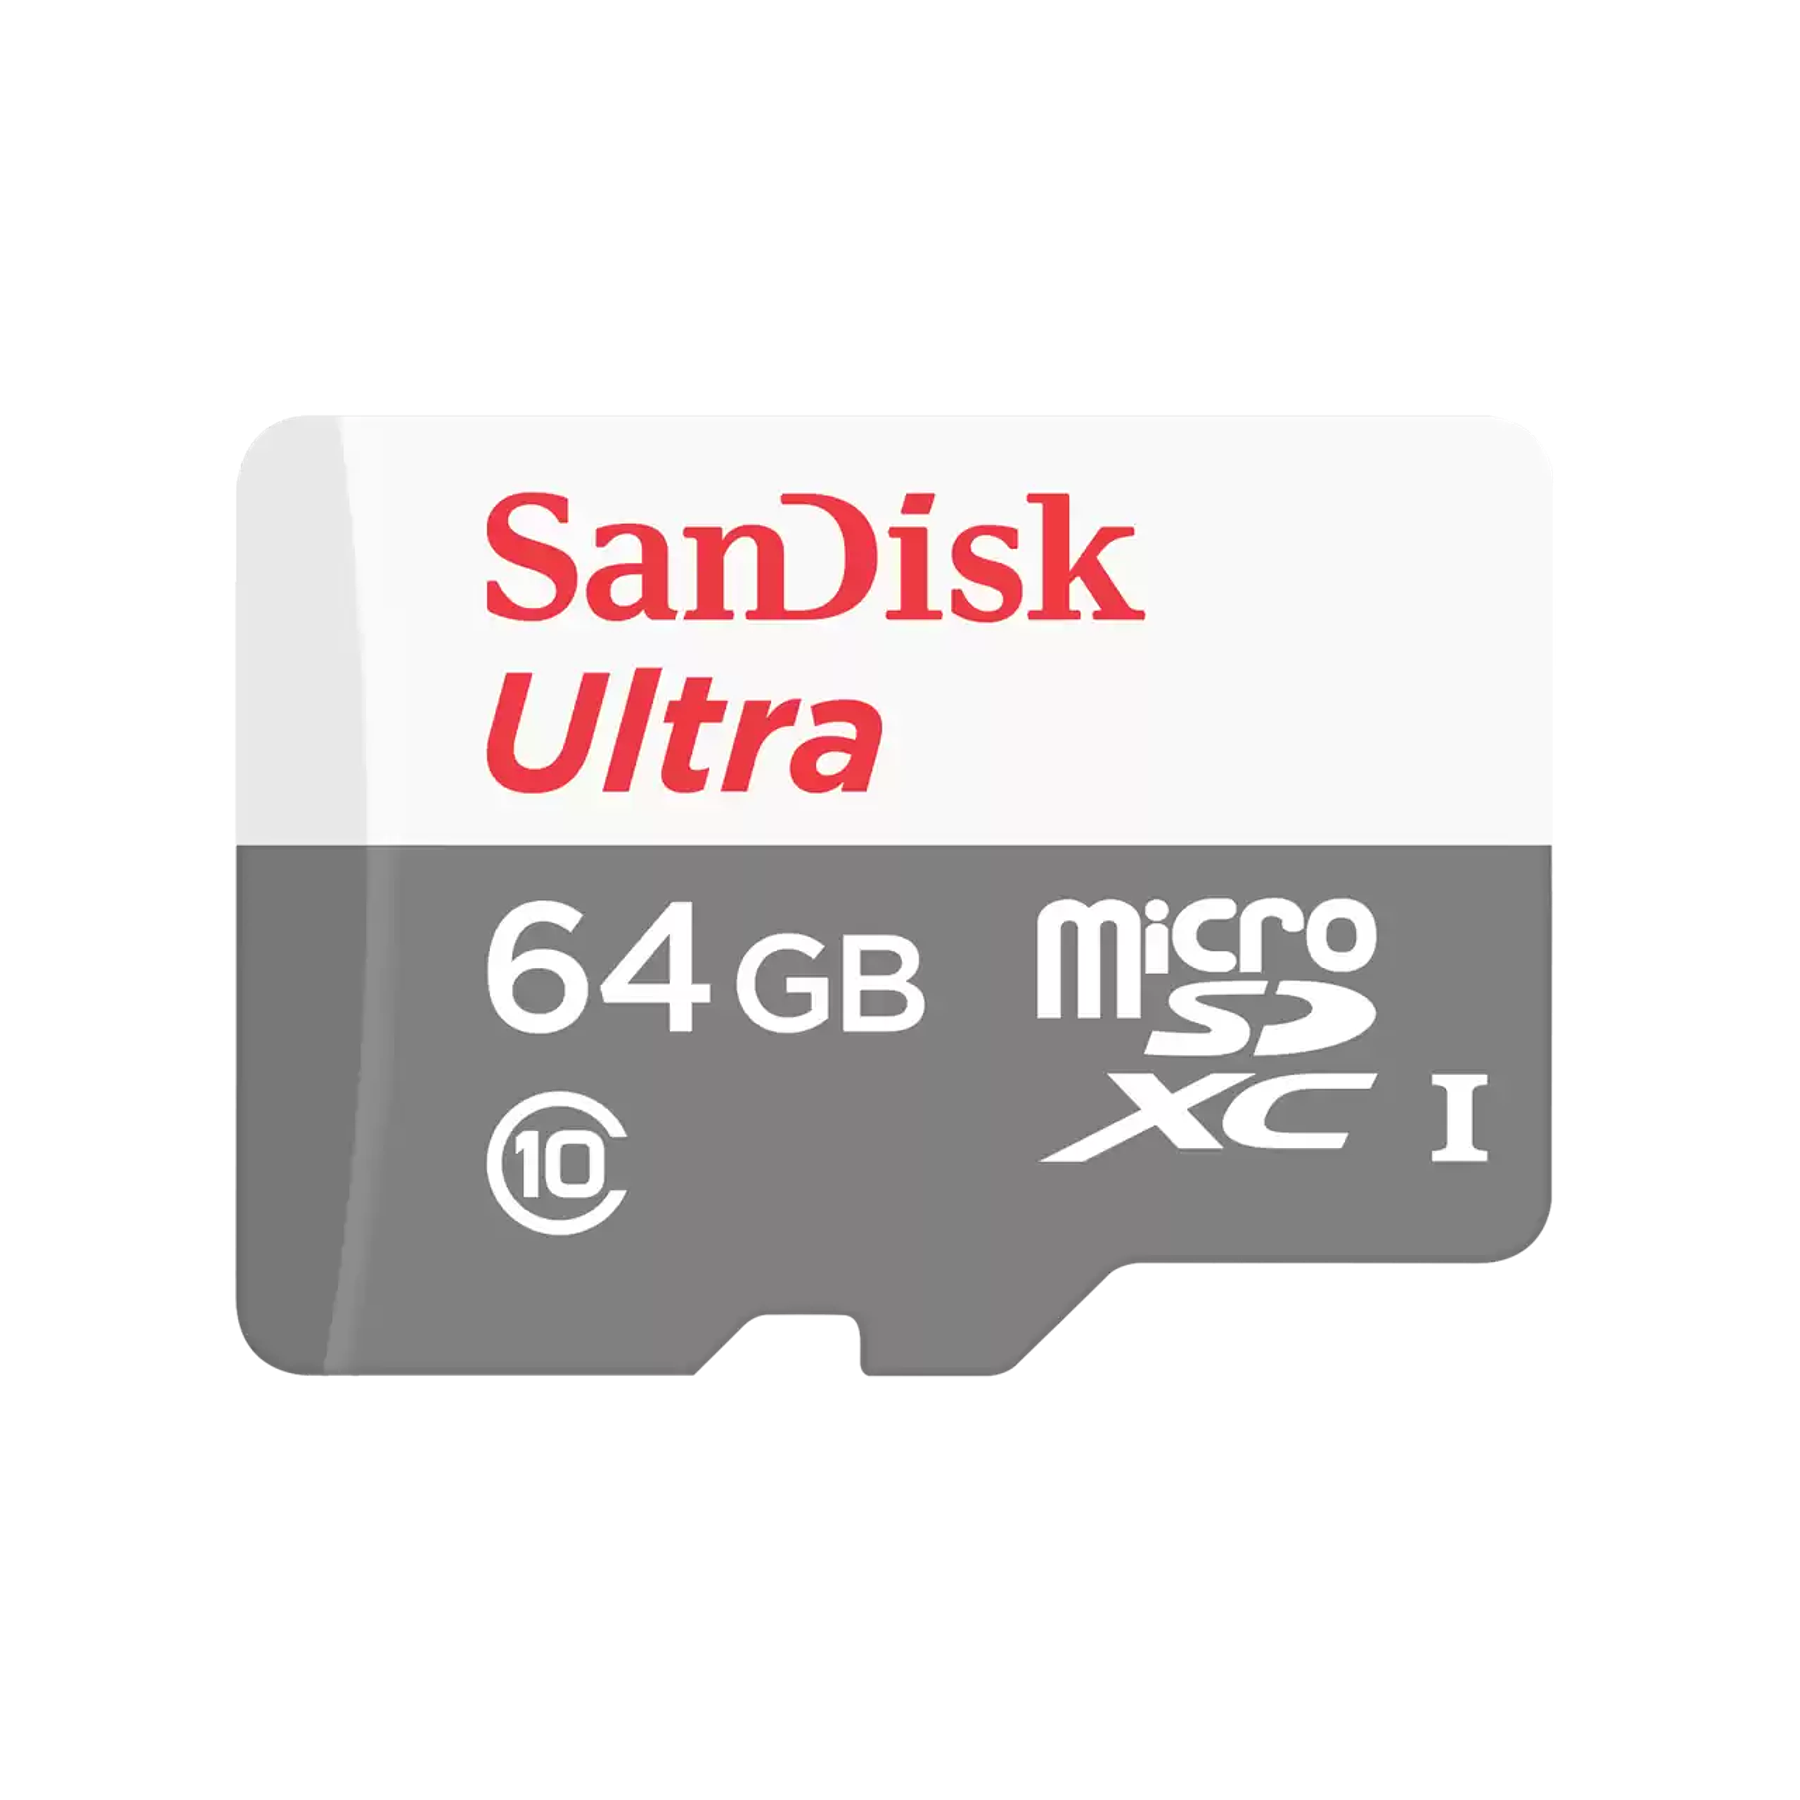 SanDisk Tarjetas SanDisk Ultra microSDHC y microSDXC UHS-I 64 GB